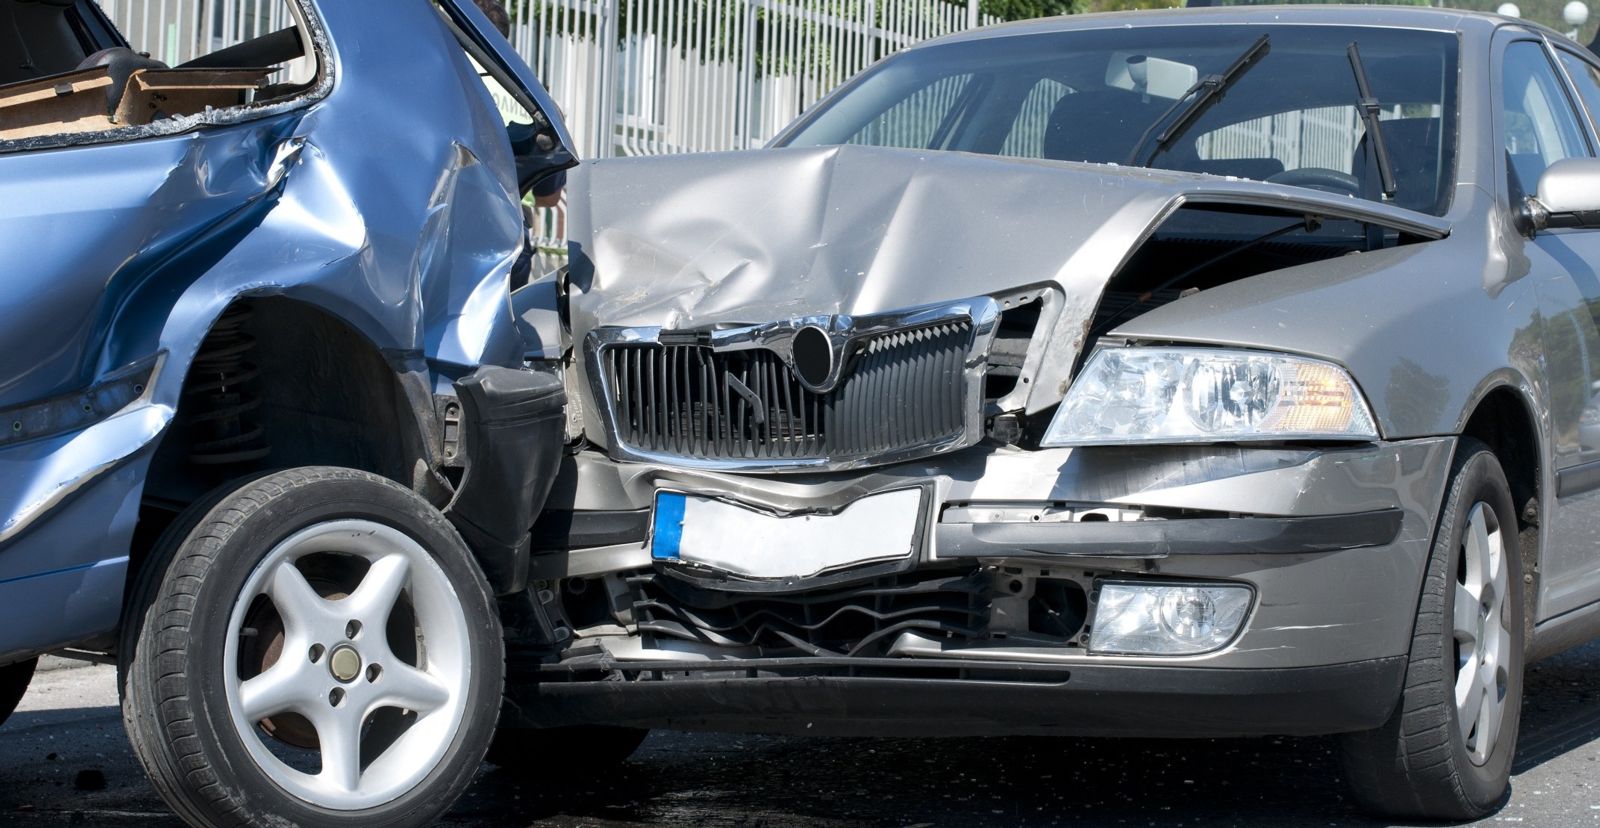 Virginia car crash lawyer, Virginia tort law